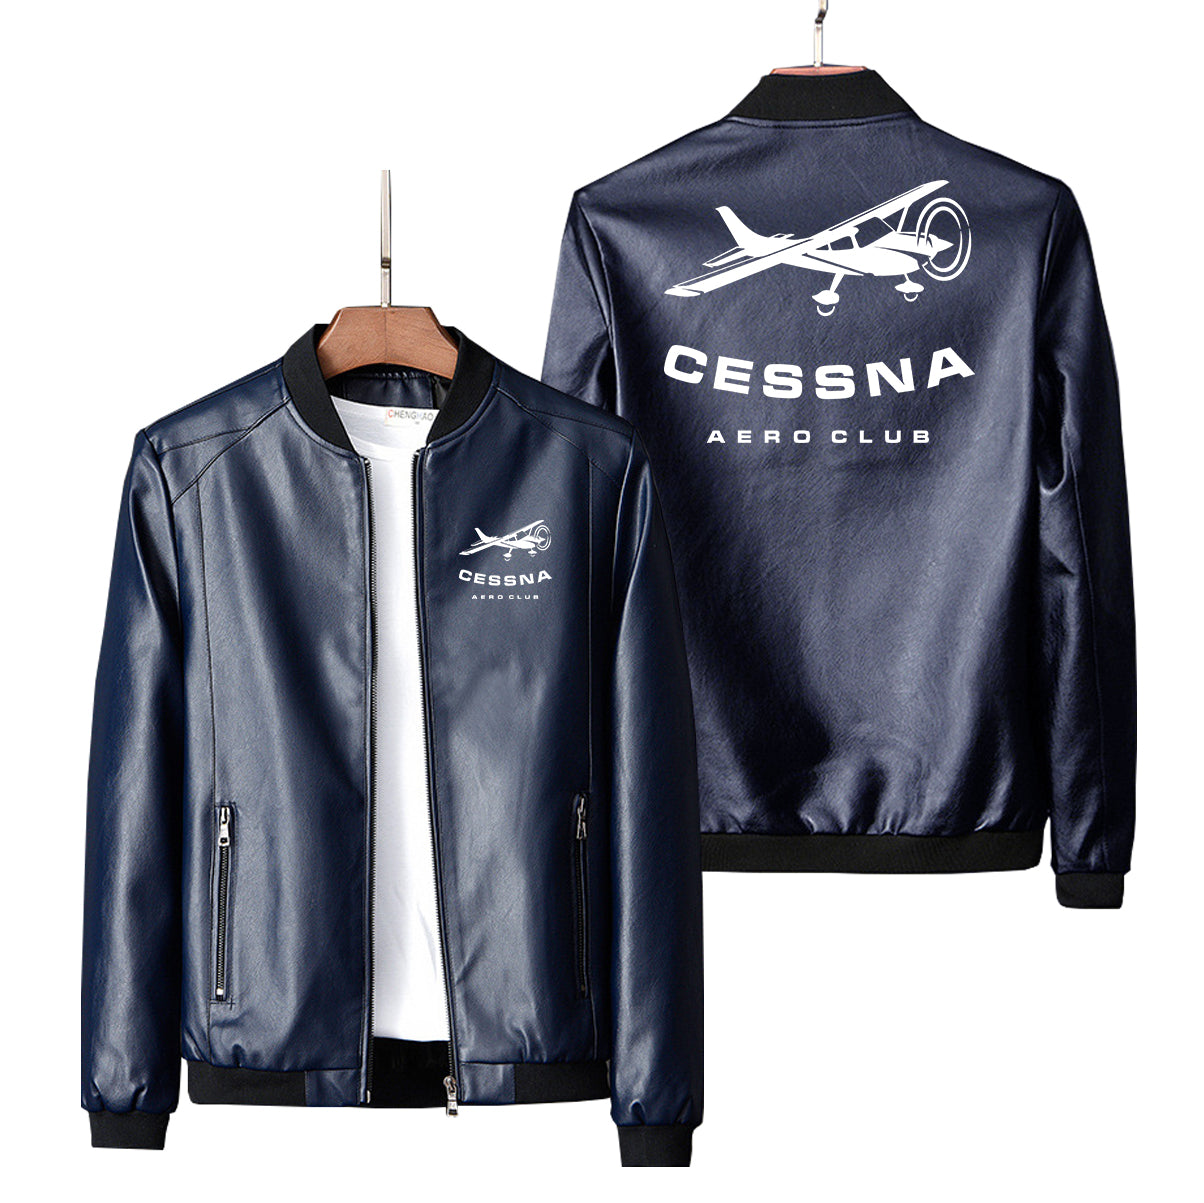 Cessna Aeroclub Designed PU Leather Jackets